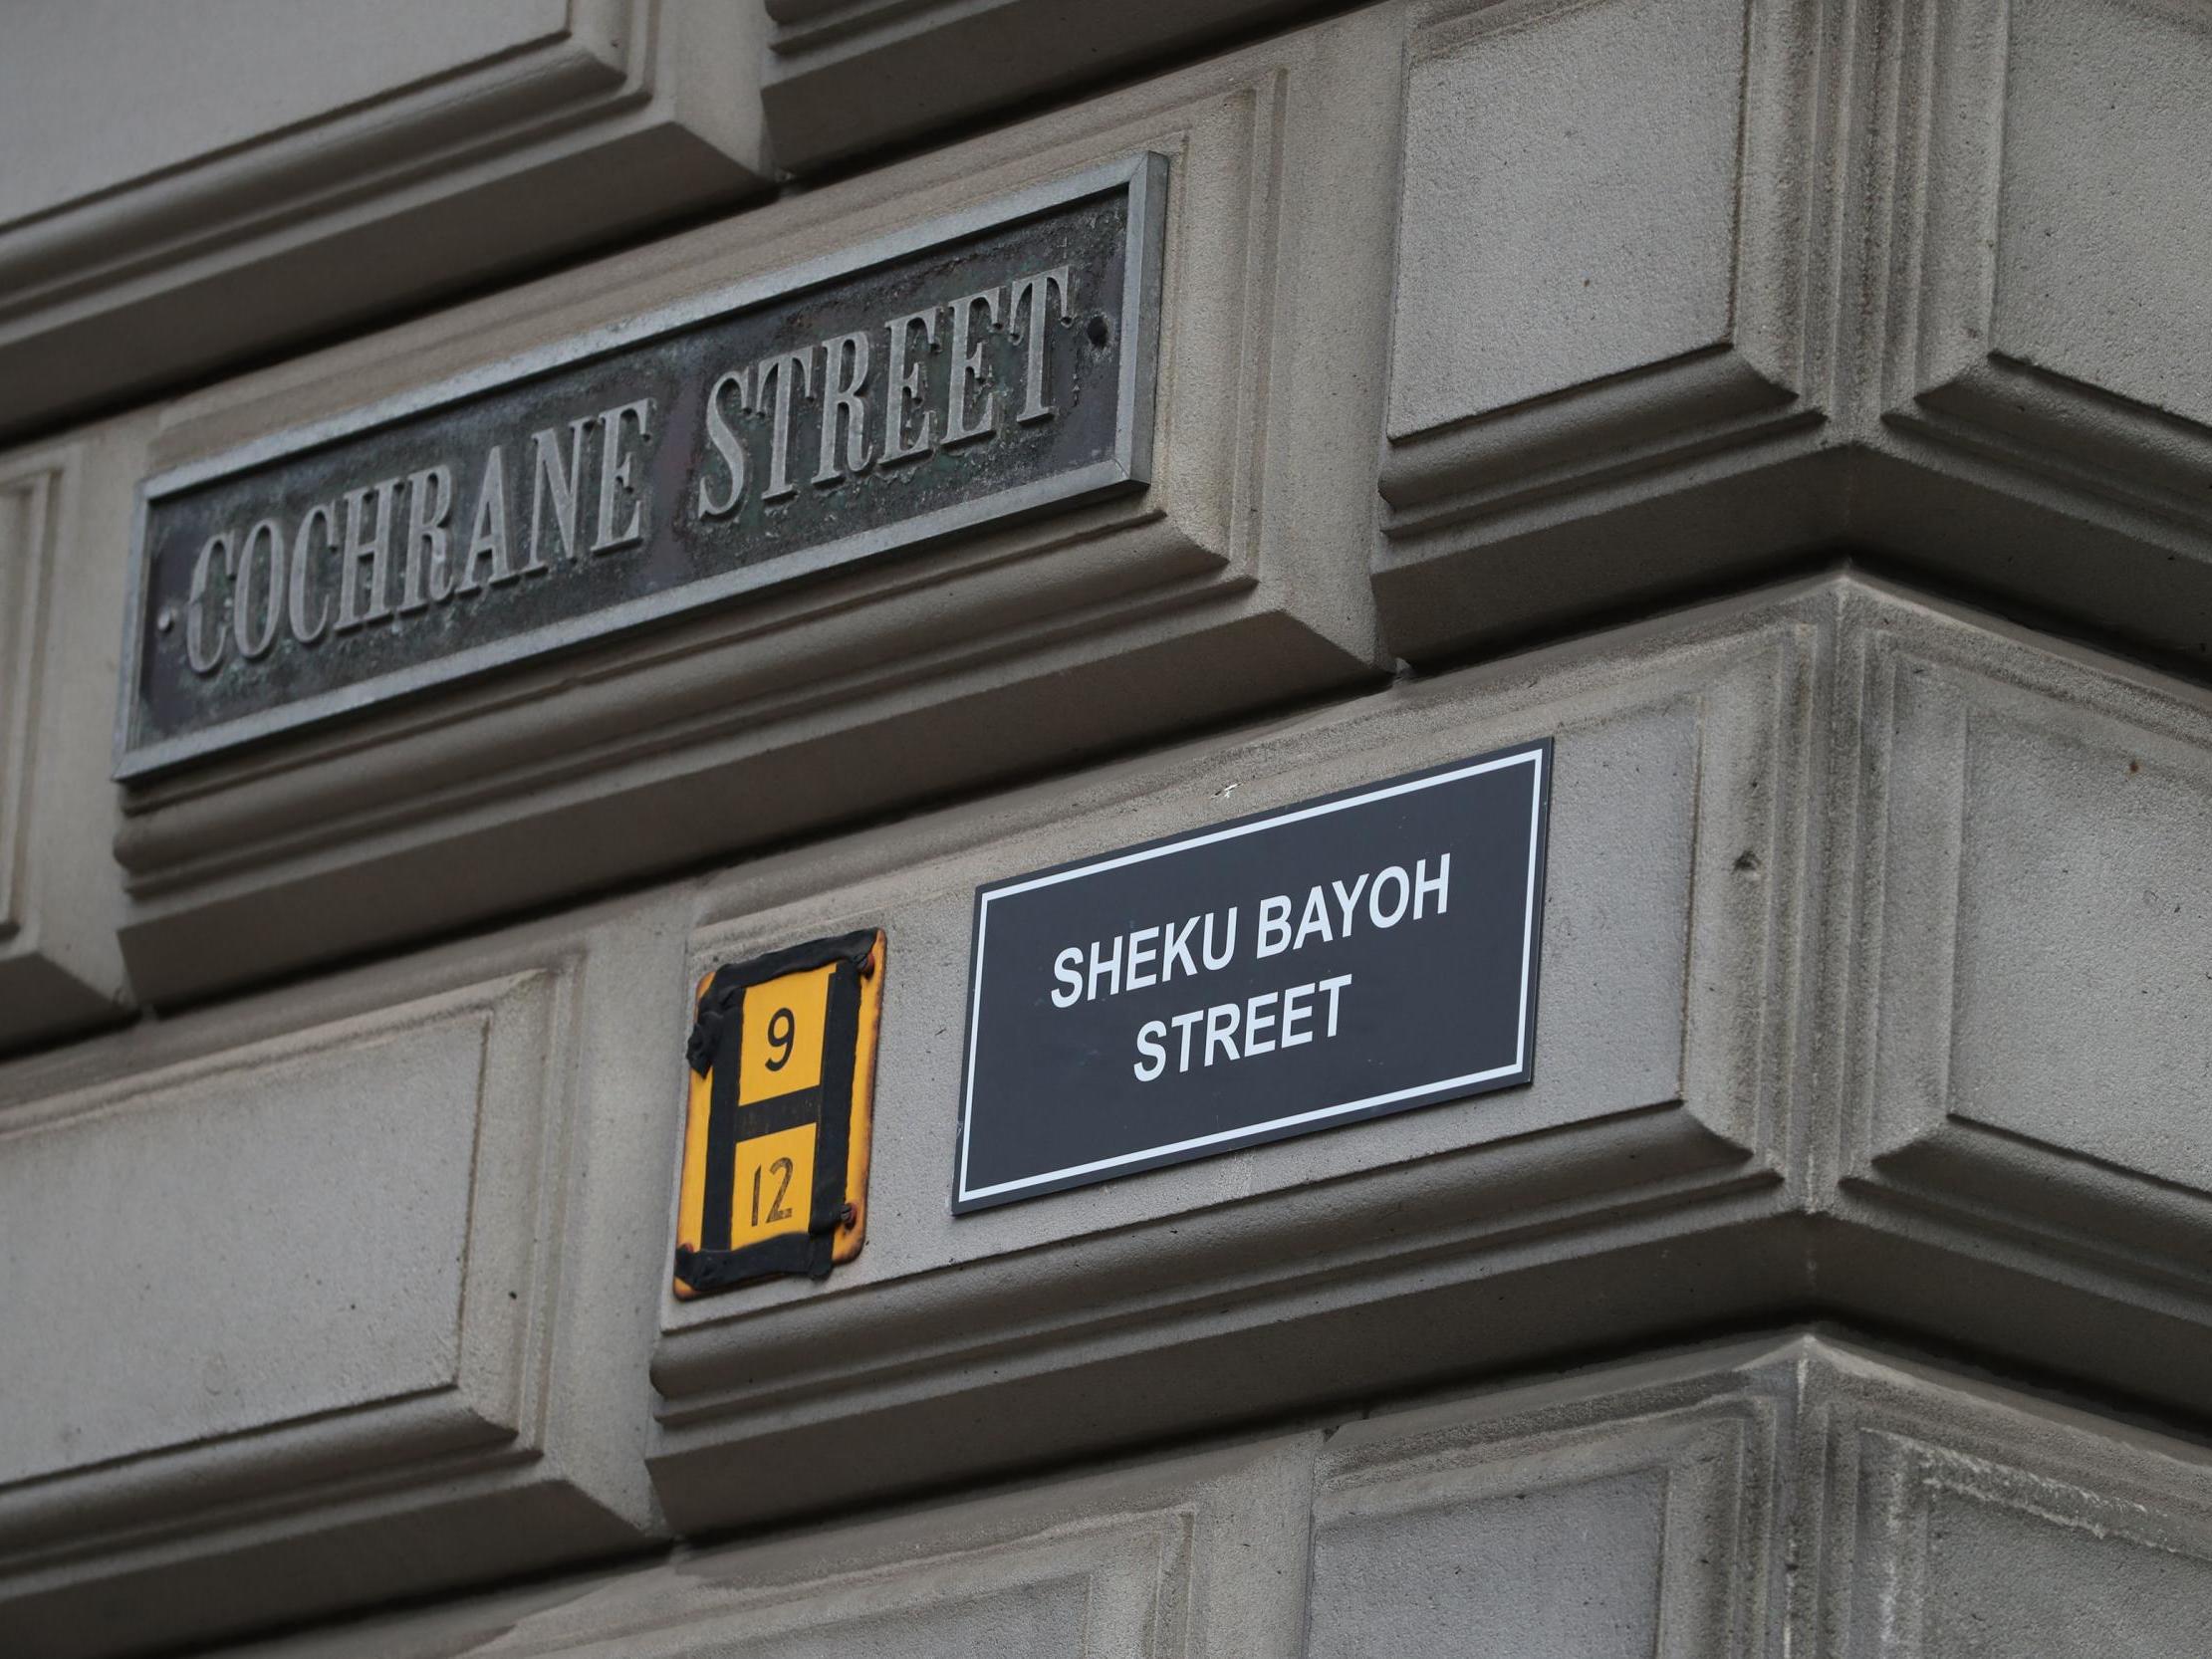 A sign alternatively naming Cochrane Street 'Sheku Bayoh Street' in Glasgow on 6 June, 2020.